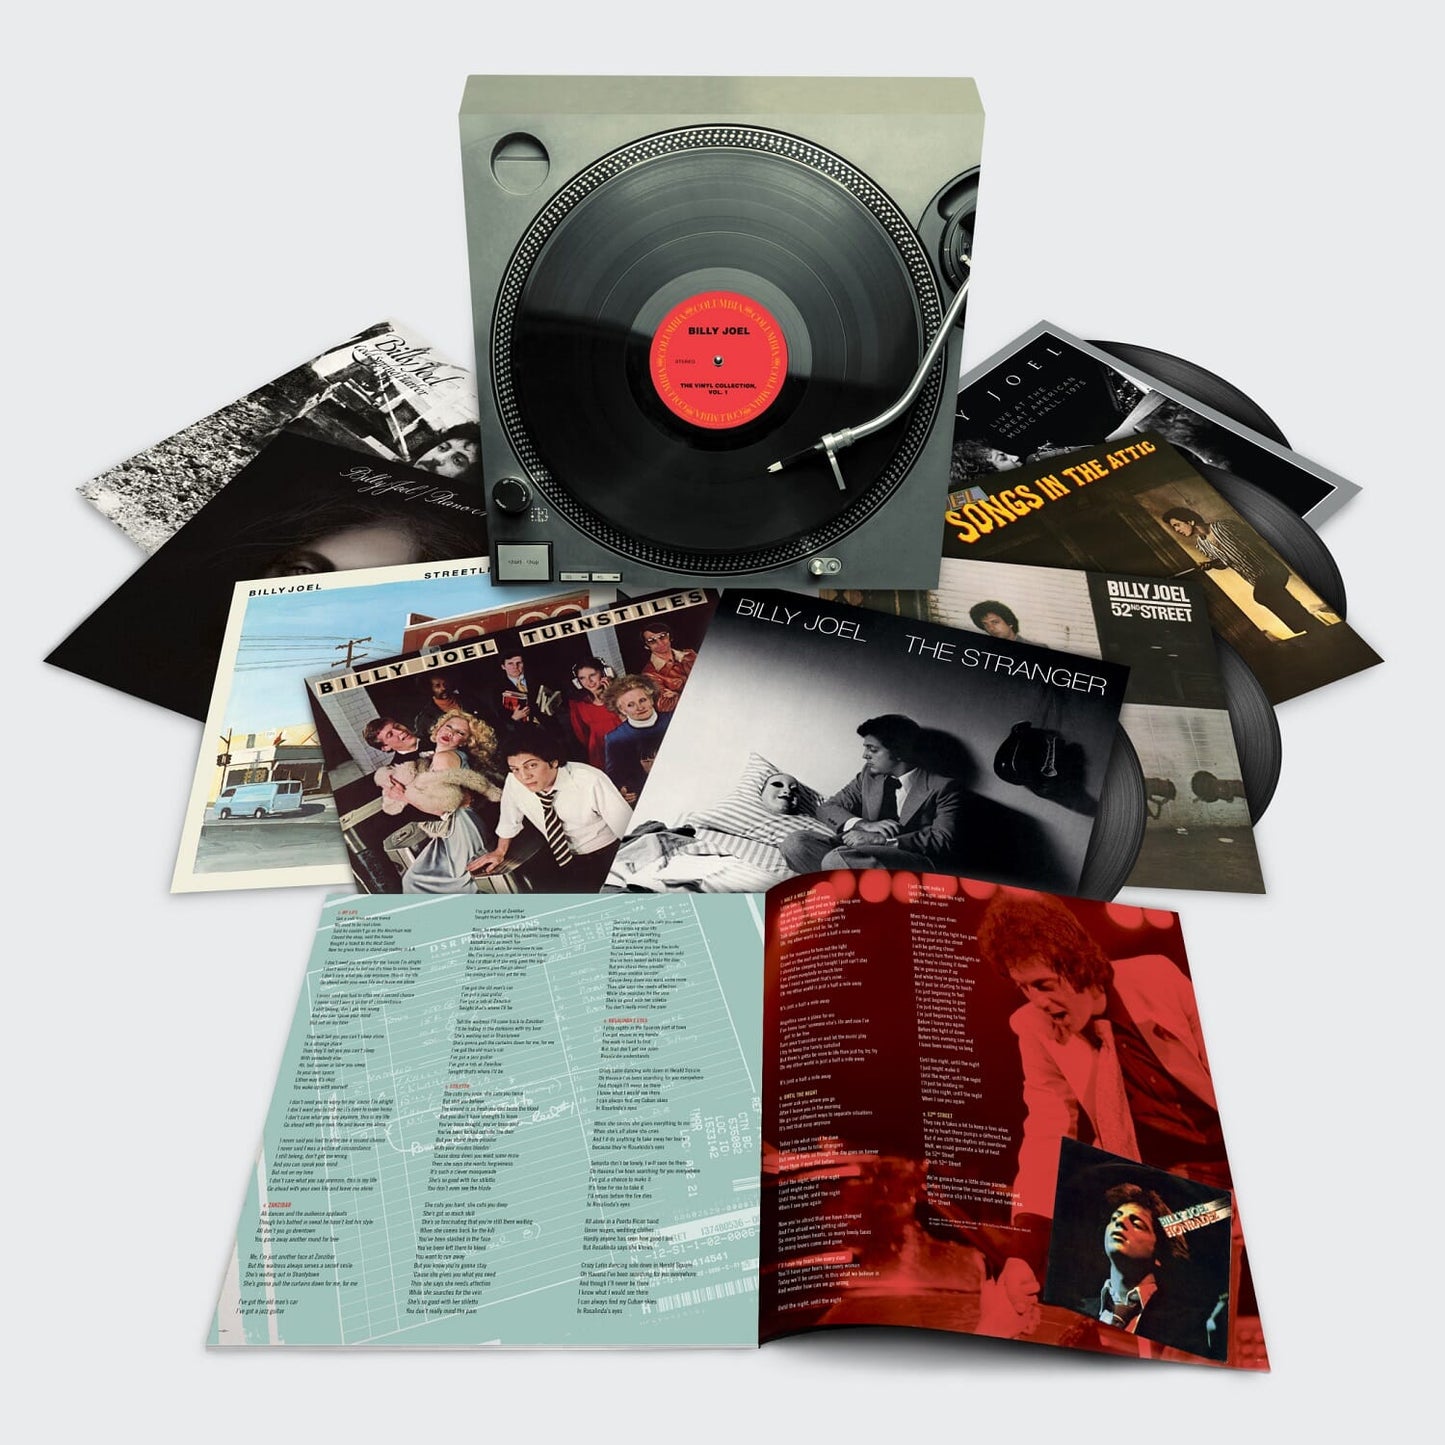 Billy Joel - The Vinyl Collection, Vol. 1 - 9x LP Box Set